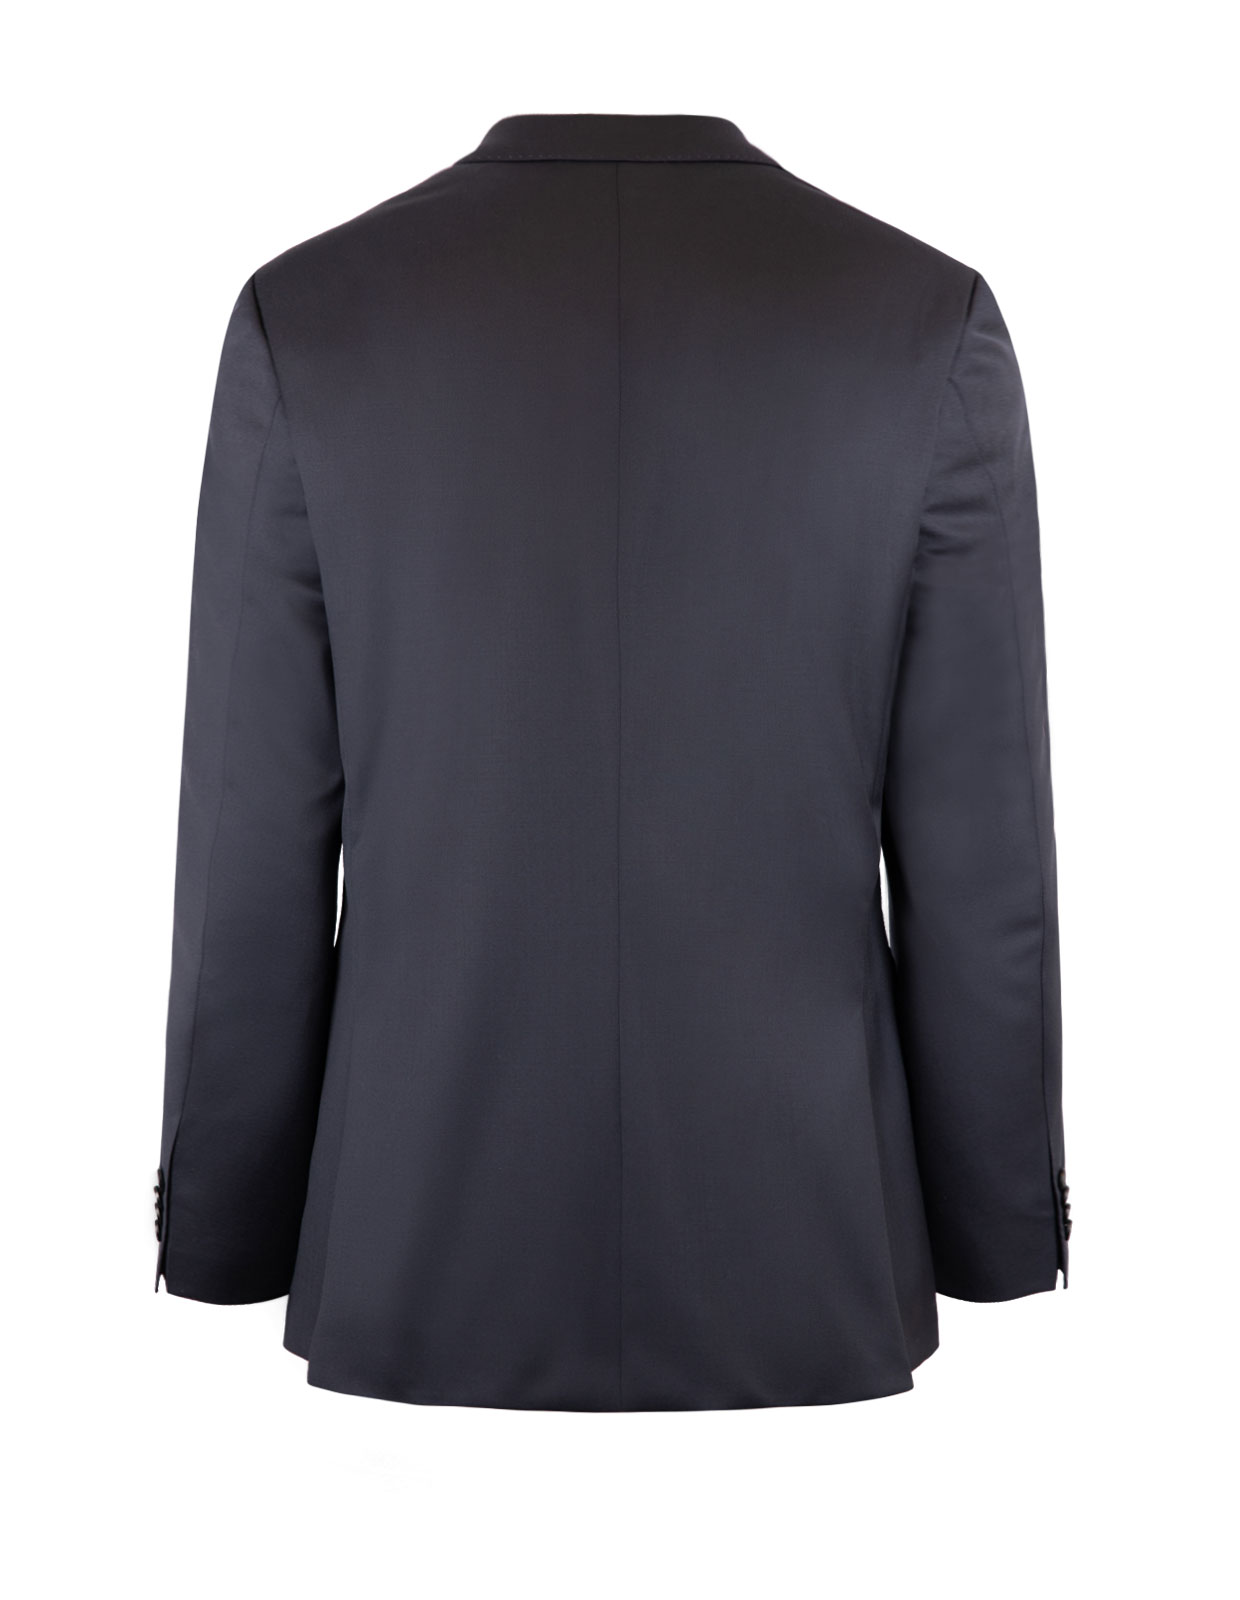 H-Jeckson Suit Jacket Regular Fit Mix & Match Navy